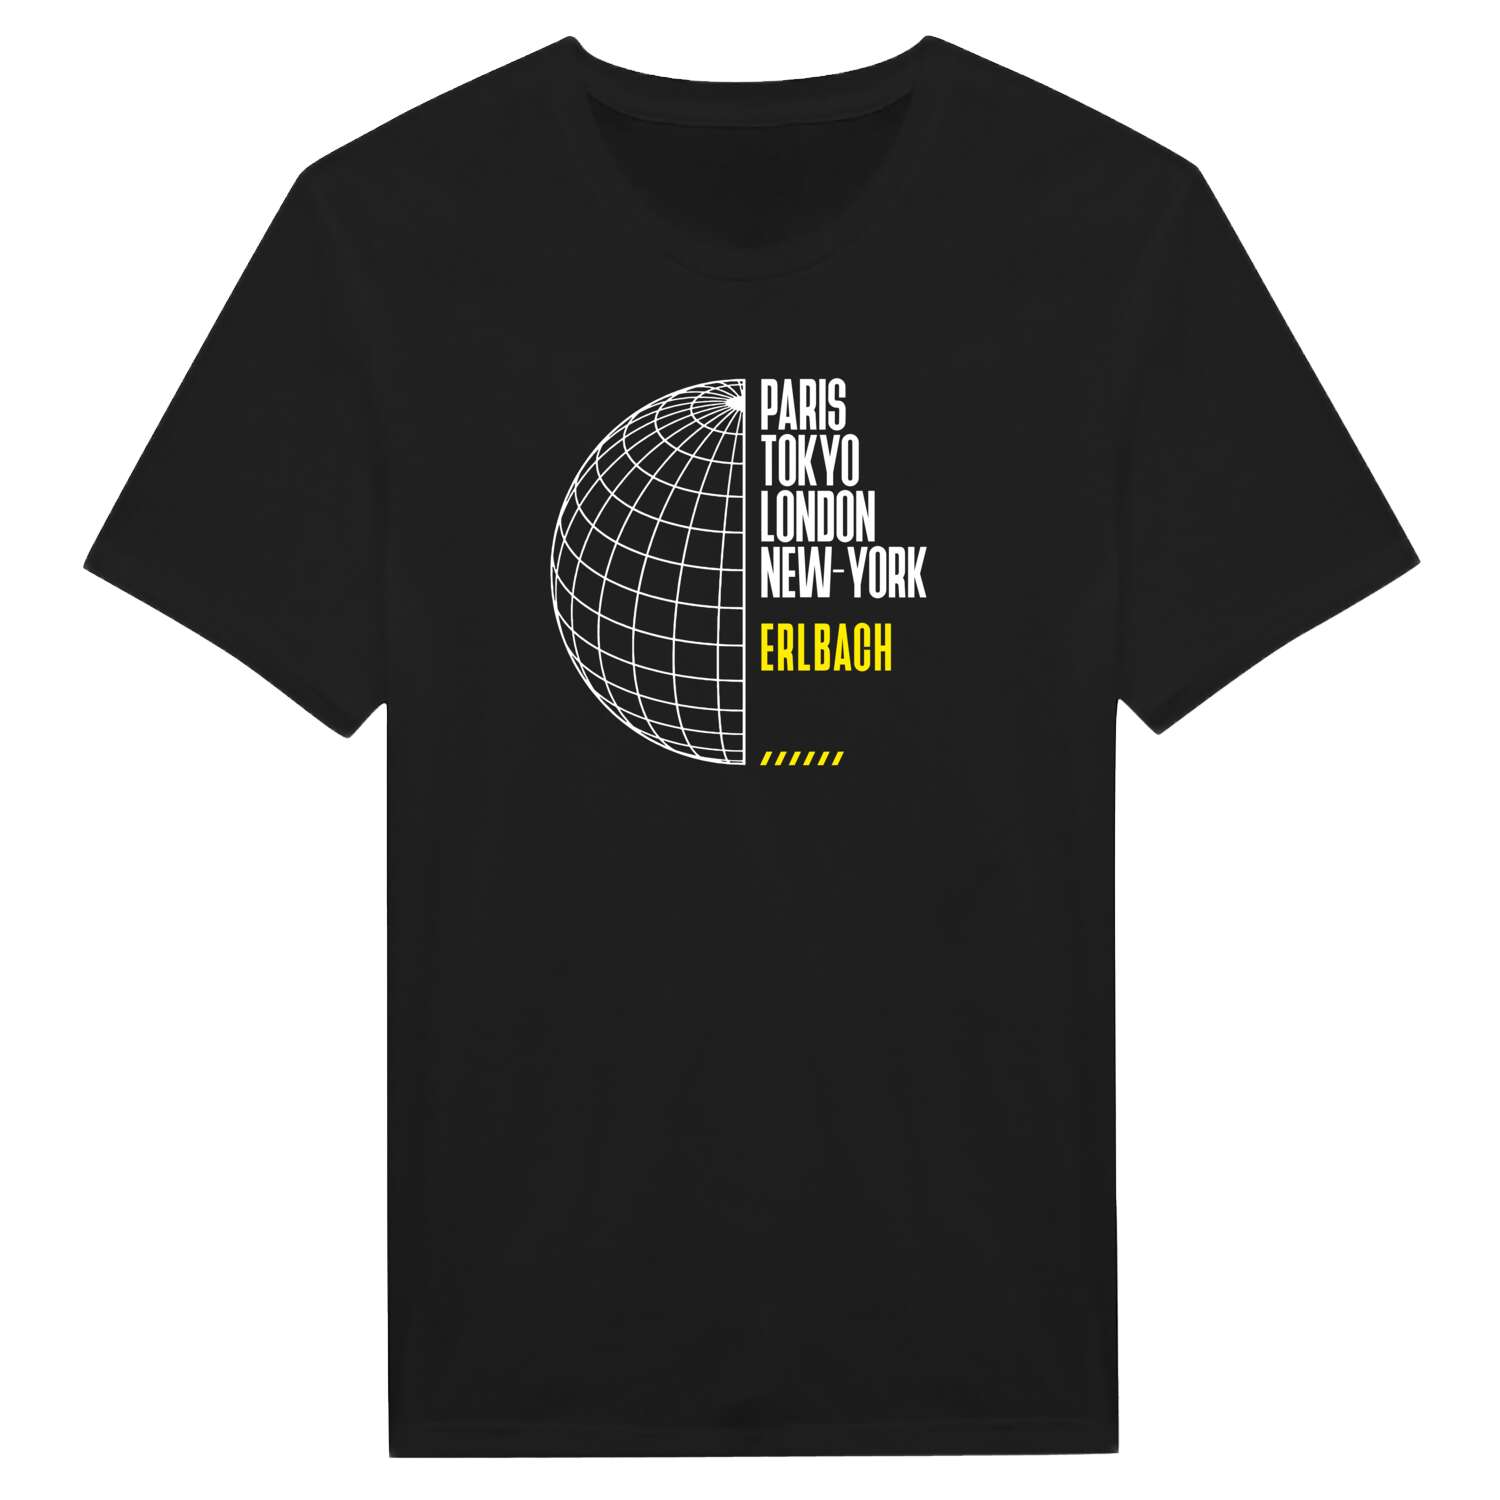 Erlbach T-Shirt »Paris Tokyo London«